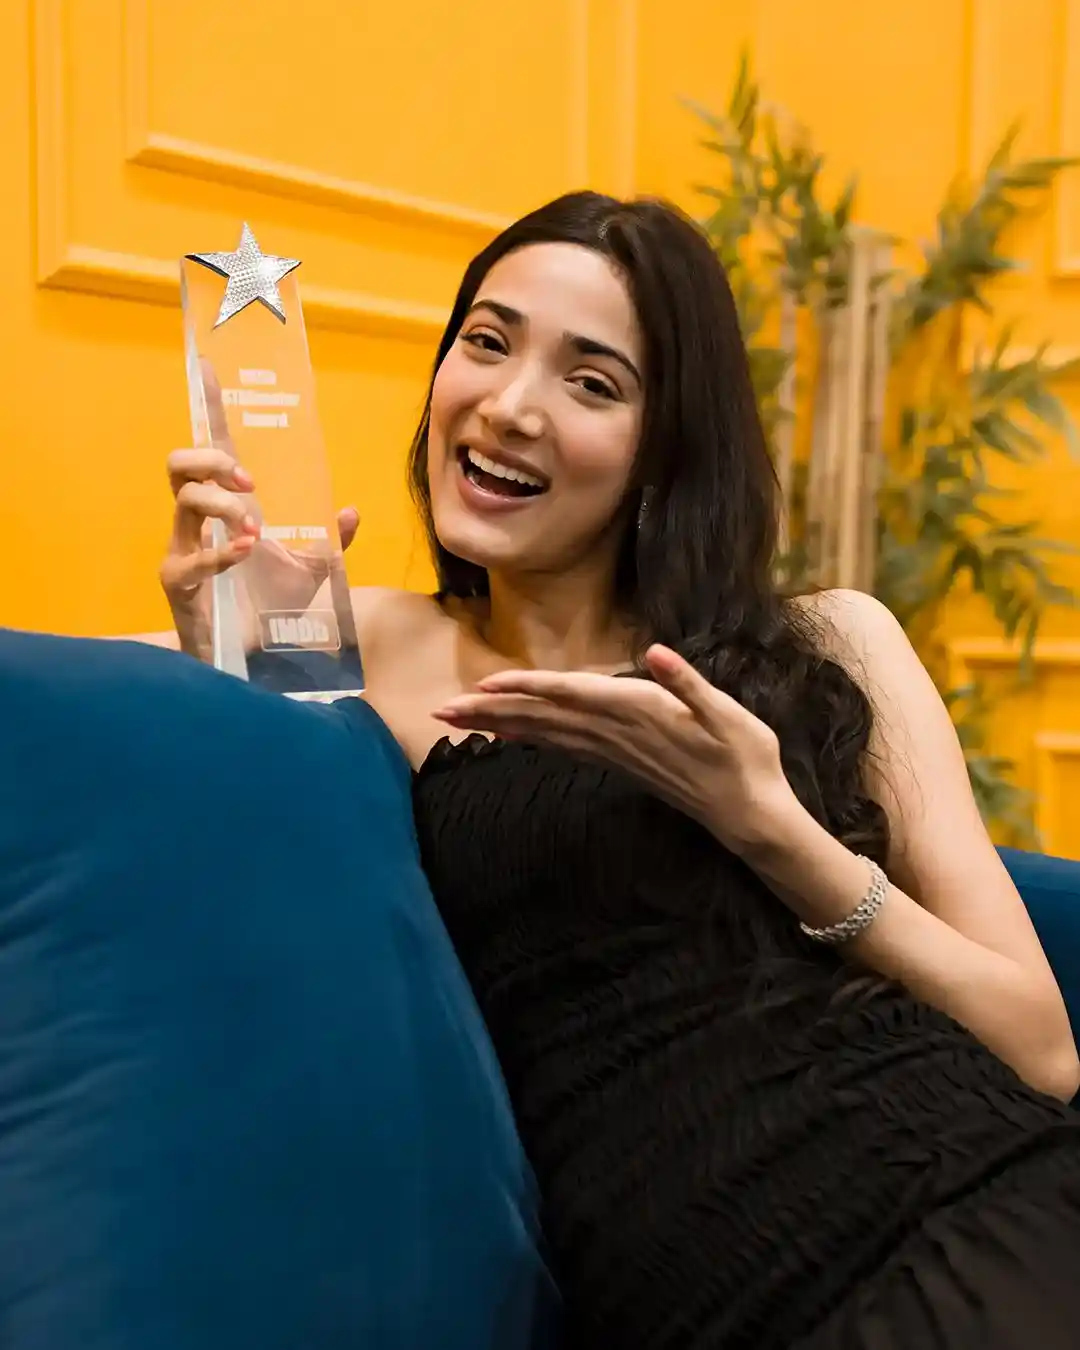 Medha received the Breakout Star STARmeter Award from IMDb